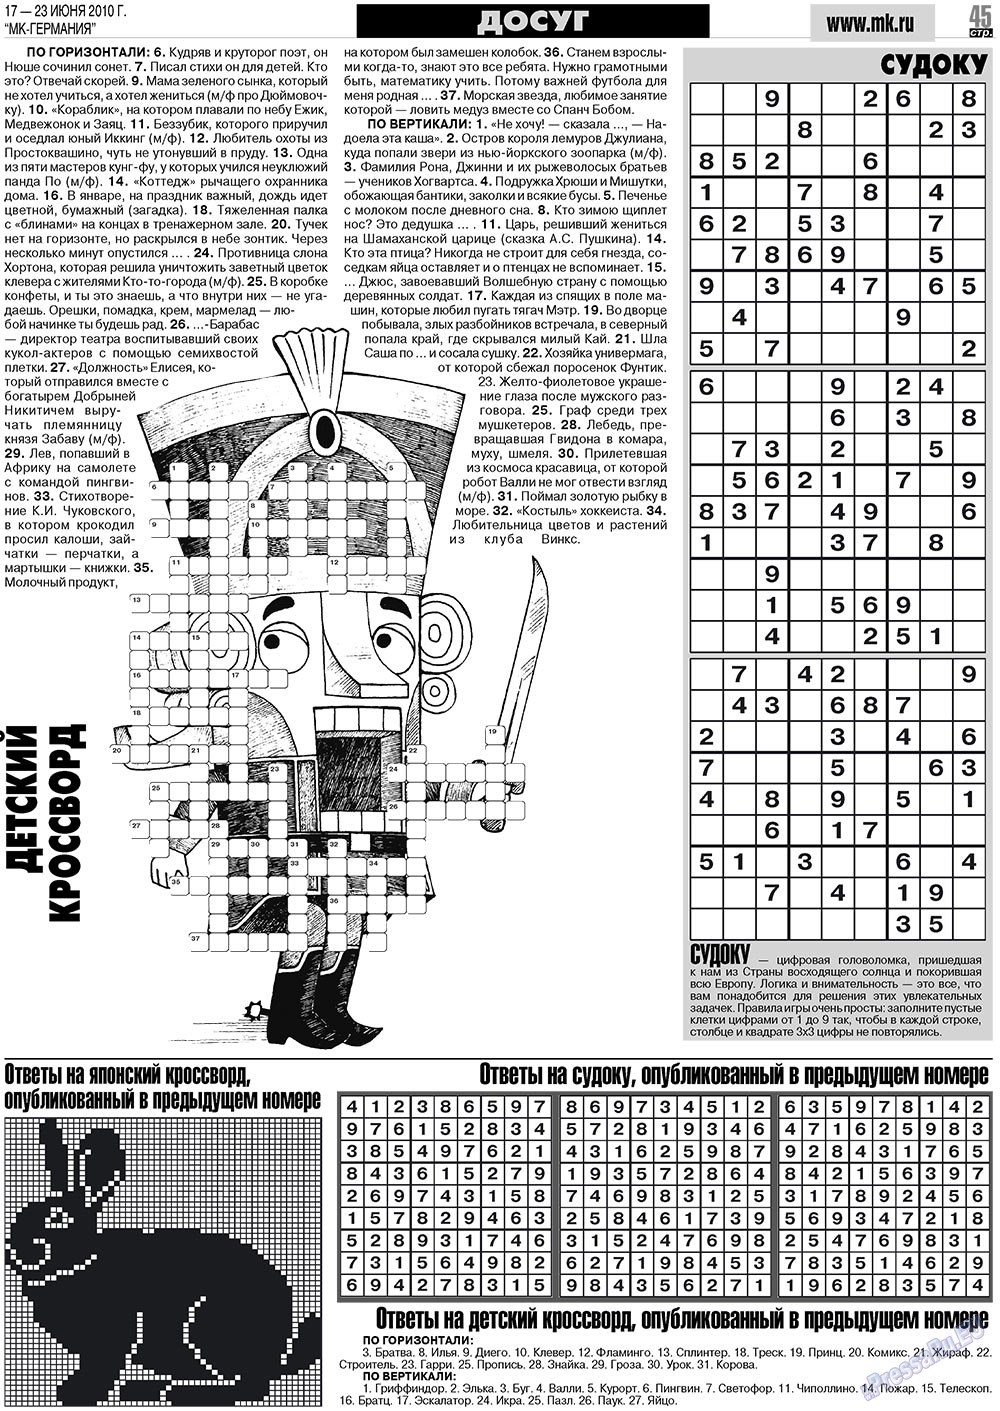 МК-Германия, газета. 2010 №25 стр.45